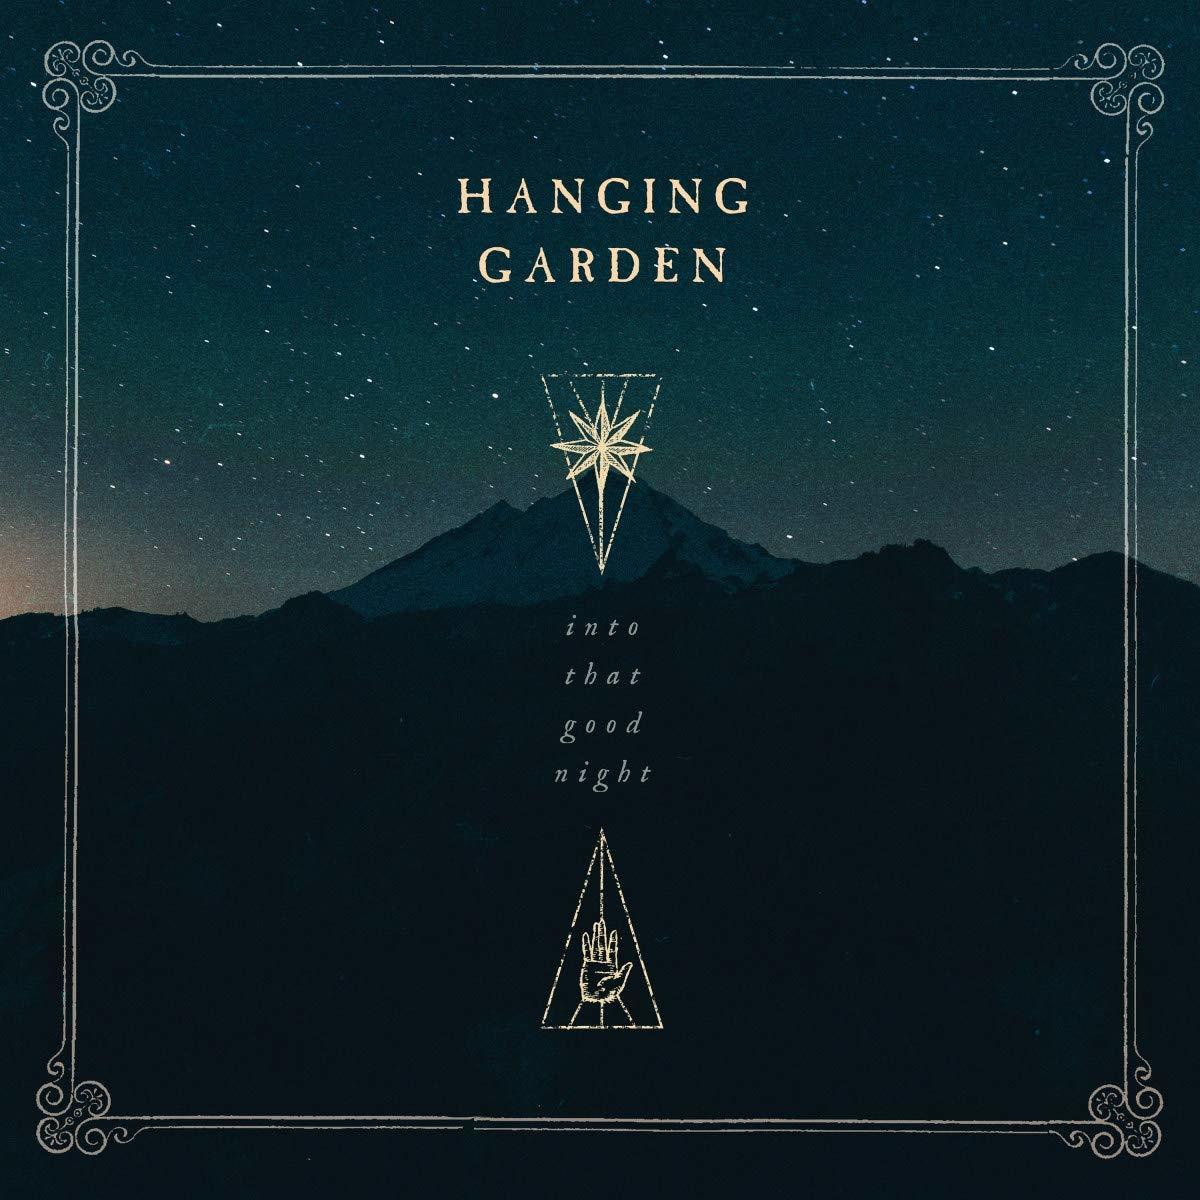 Garden Good Into Night - (Vinyl) Hanging That -